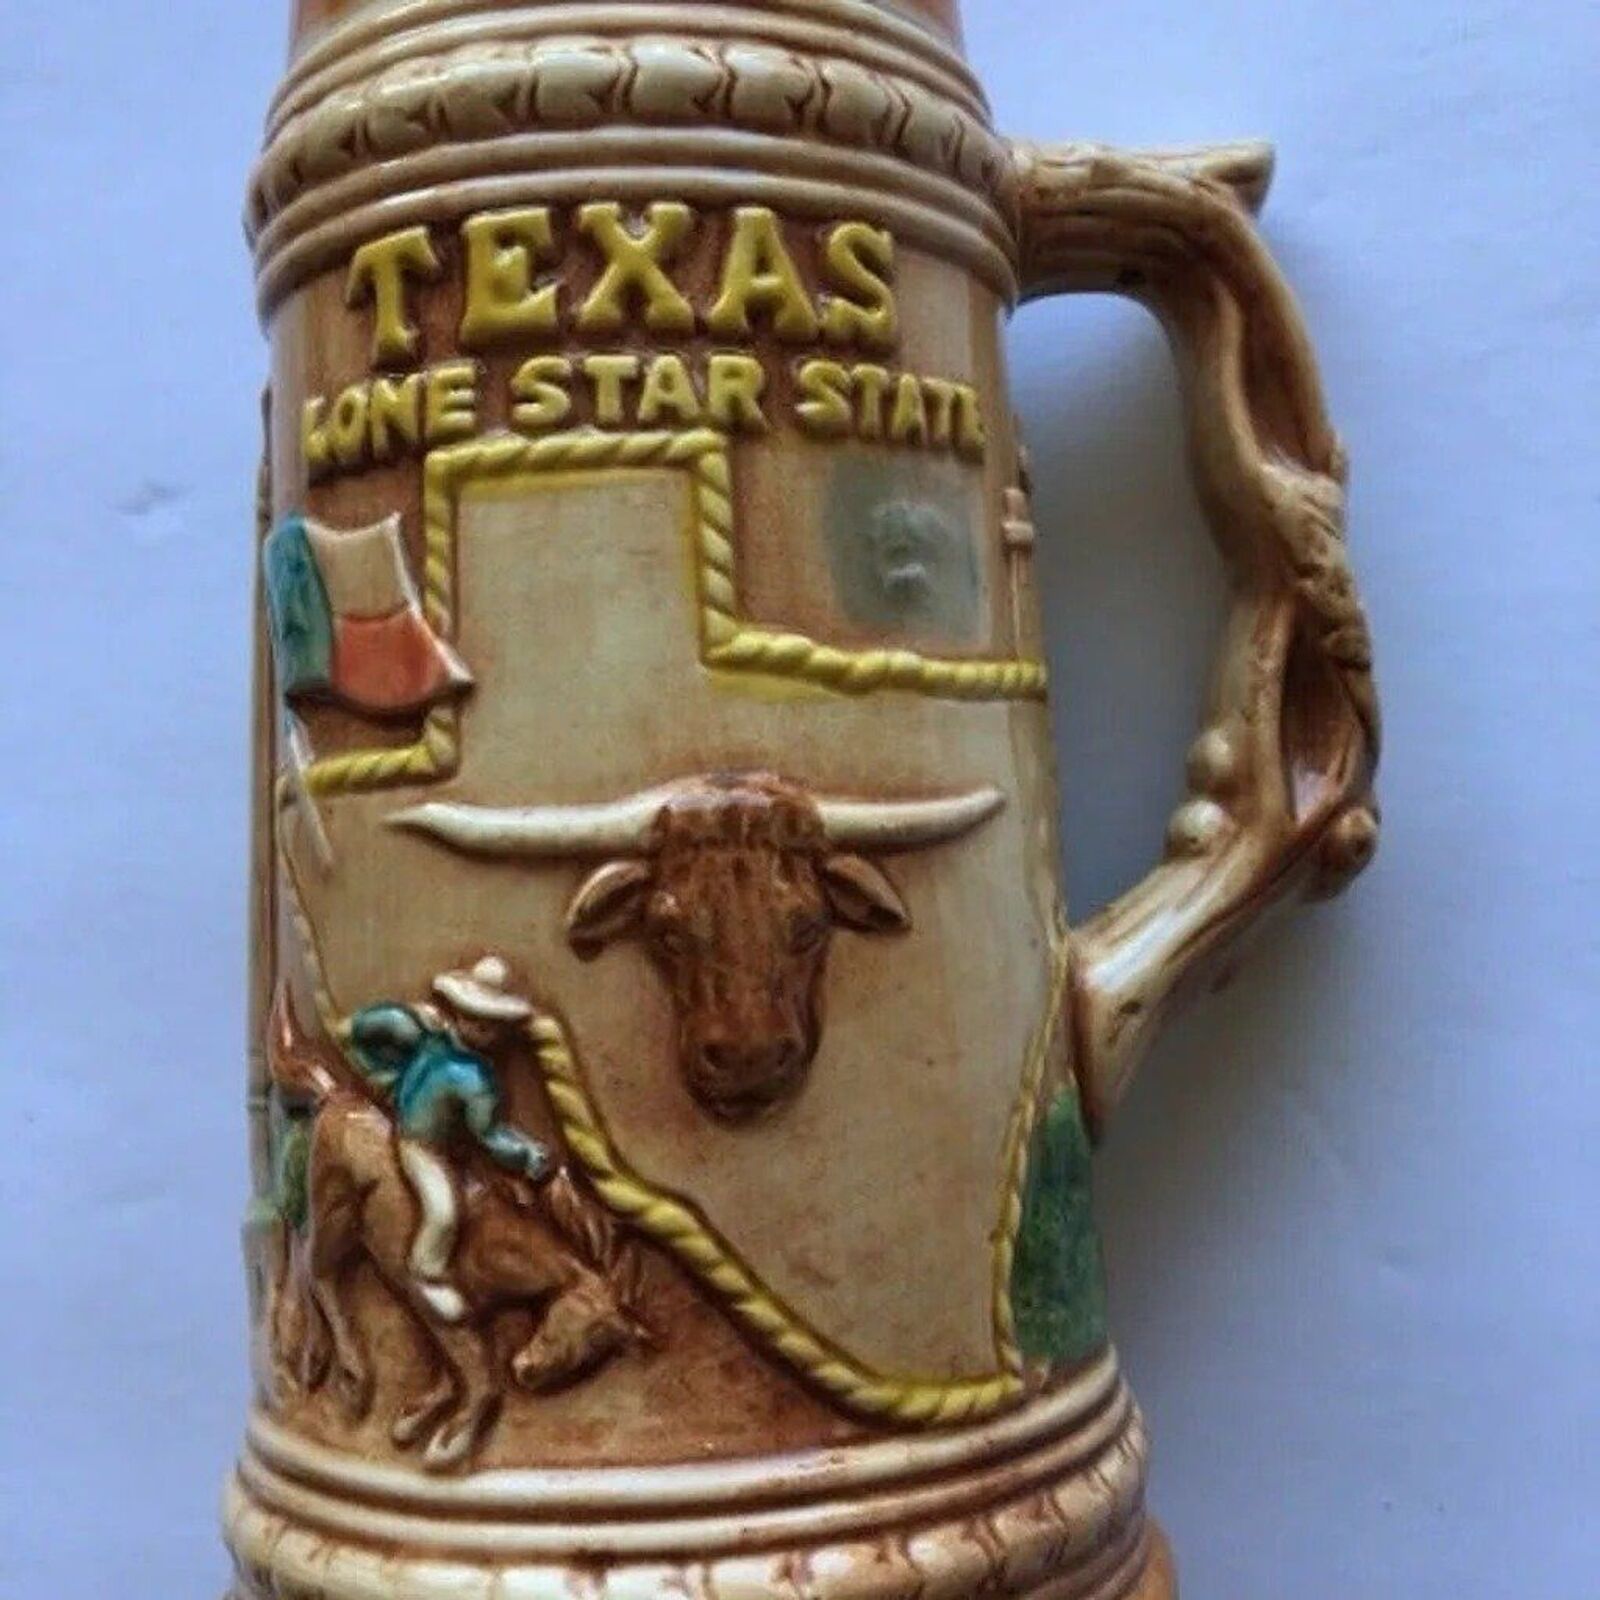 Placo Texas Lone Star State Ceramic Tankard Stein Mug Vintage Collectible